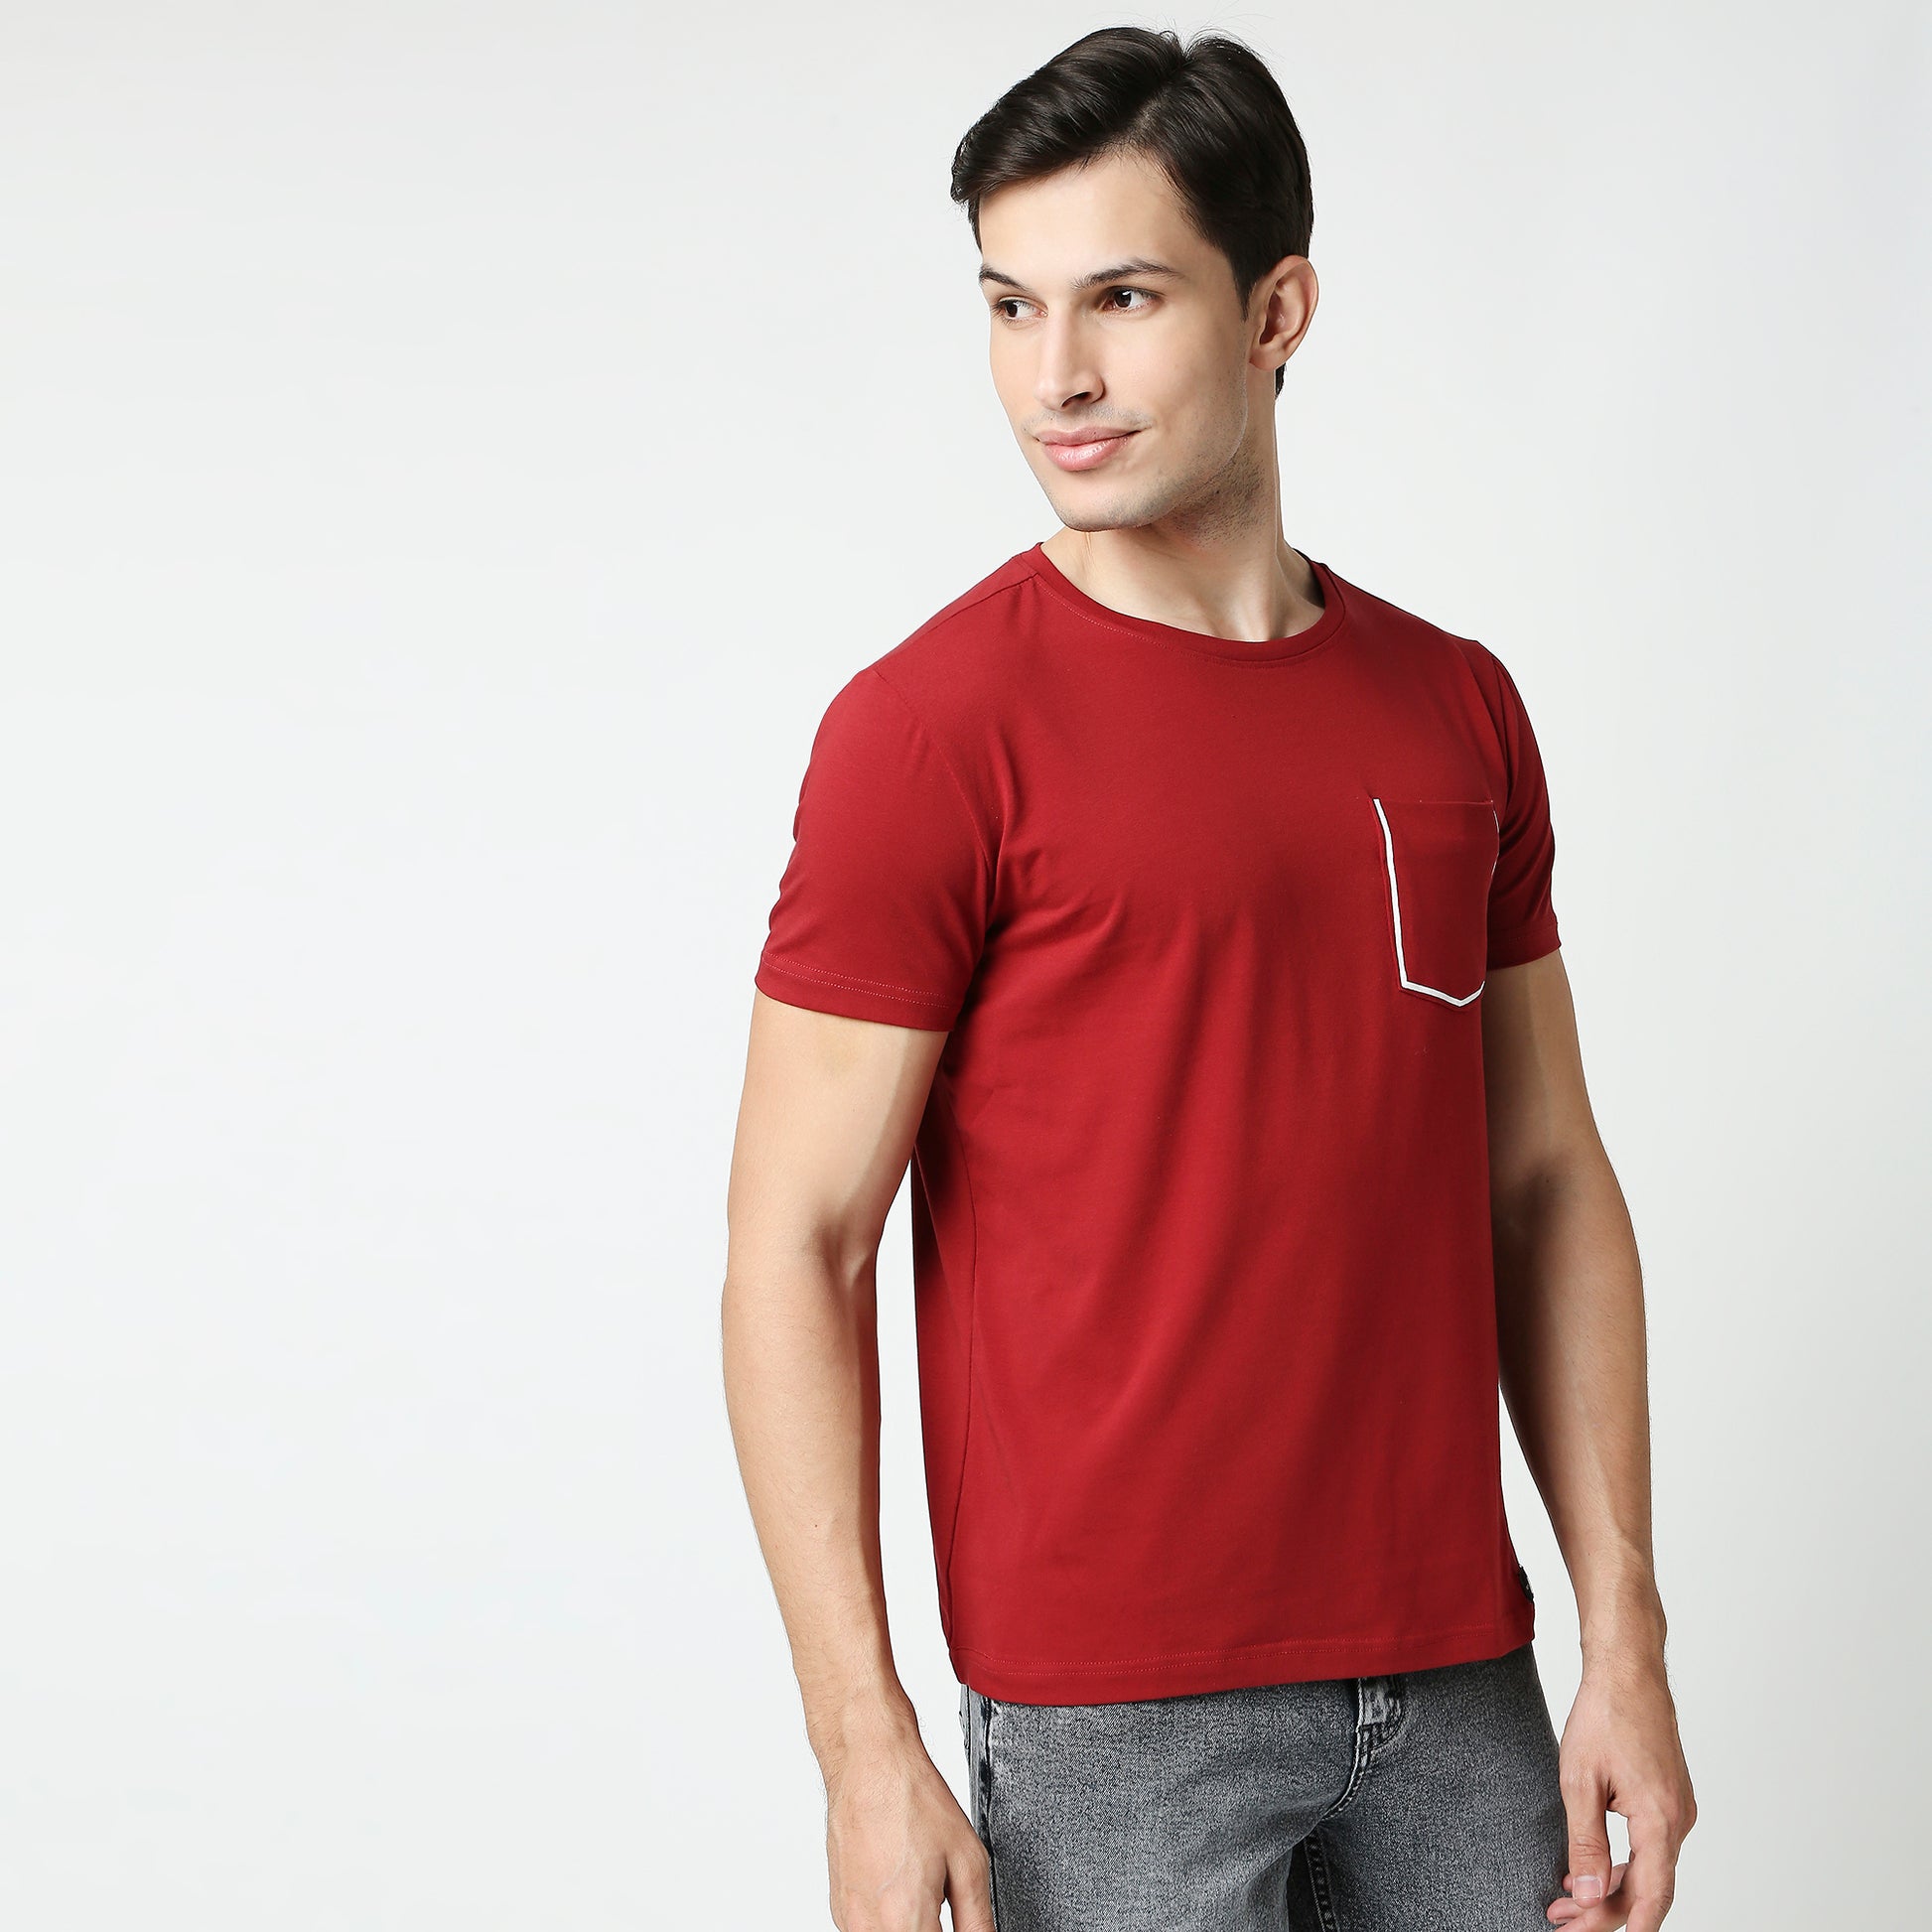 Fostino POCKET SQR round neck t-shirt - Fostino - T-Shirts